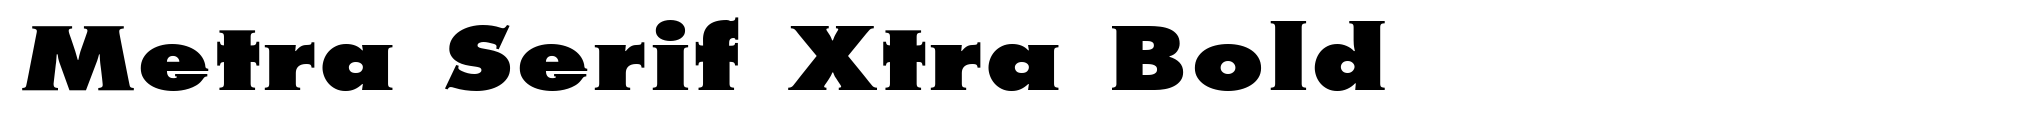 Metra Serif Xtra Bold image